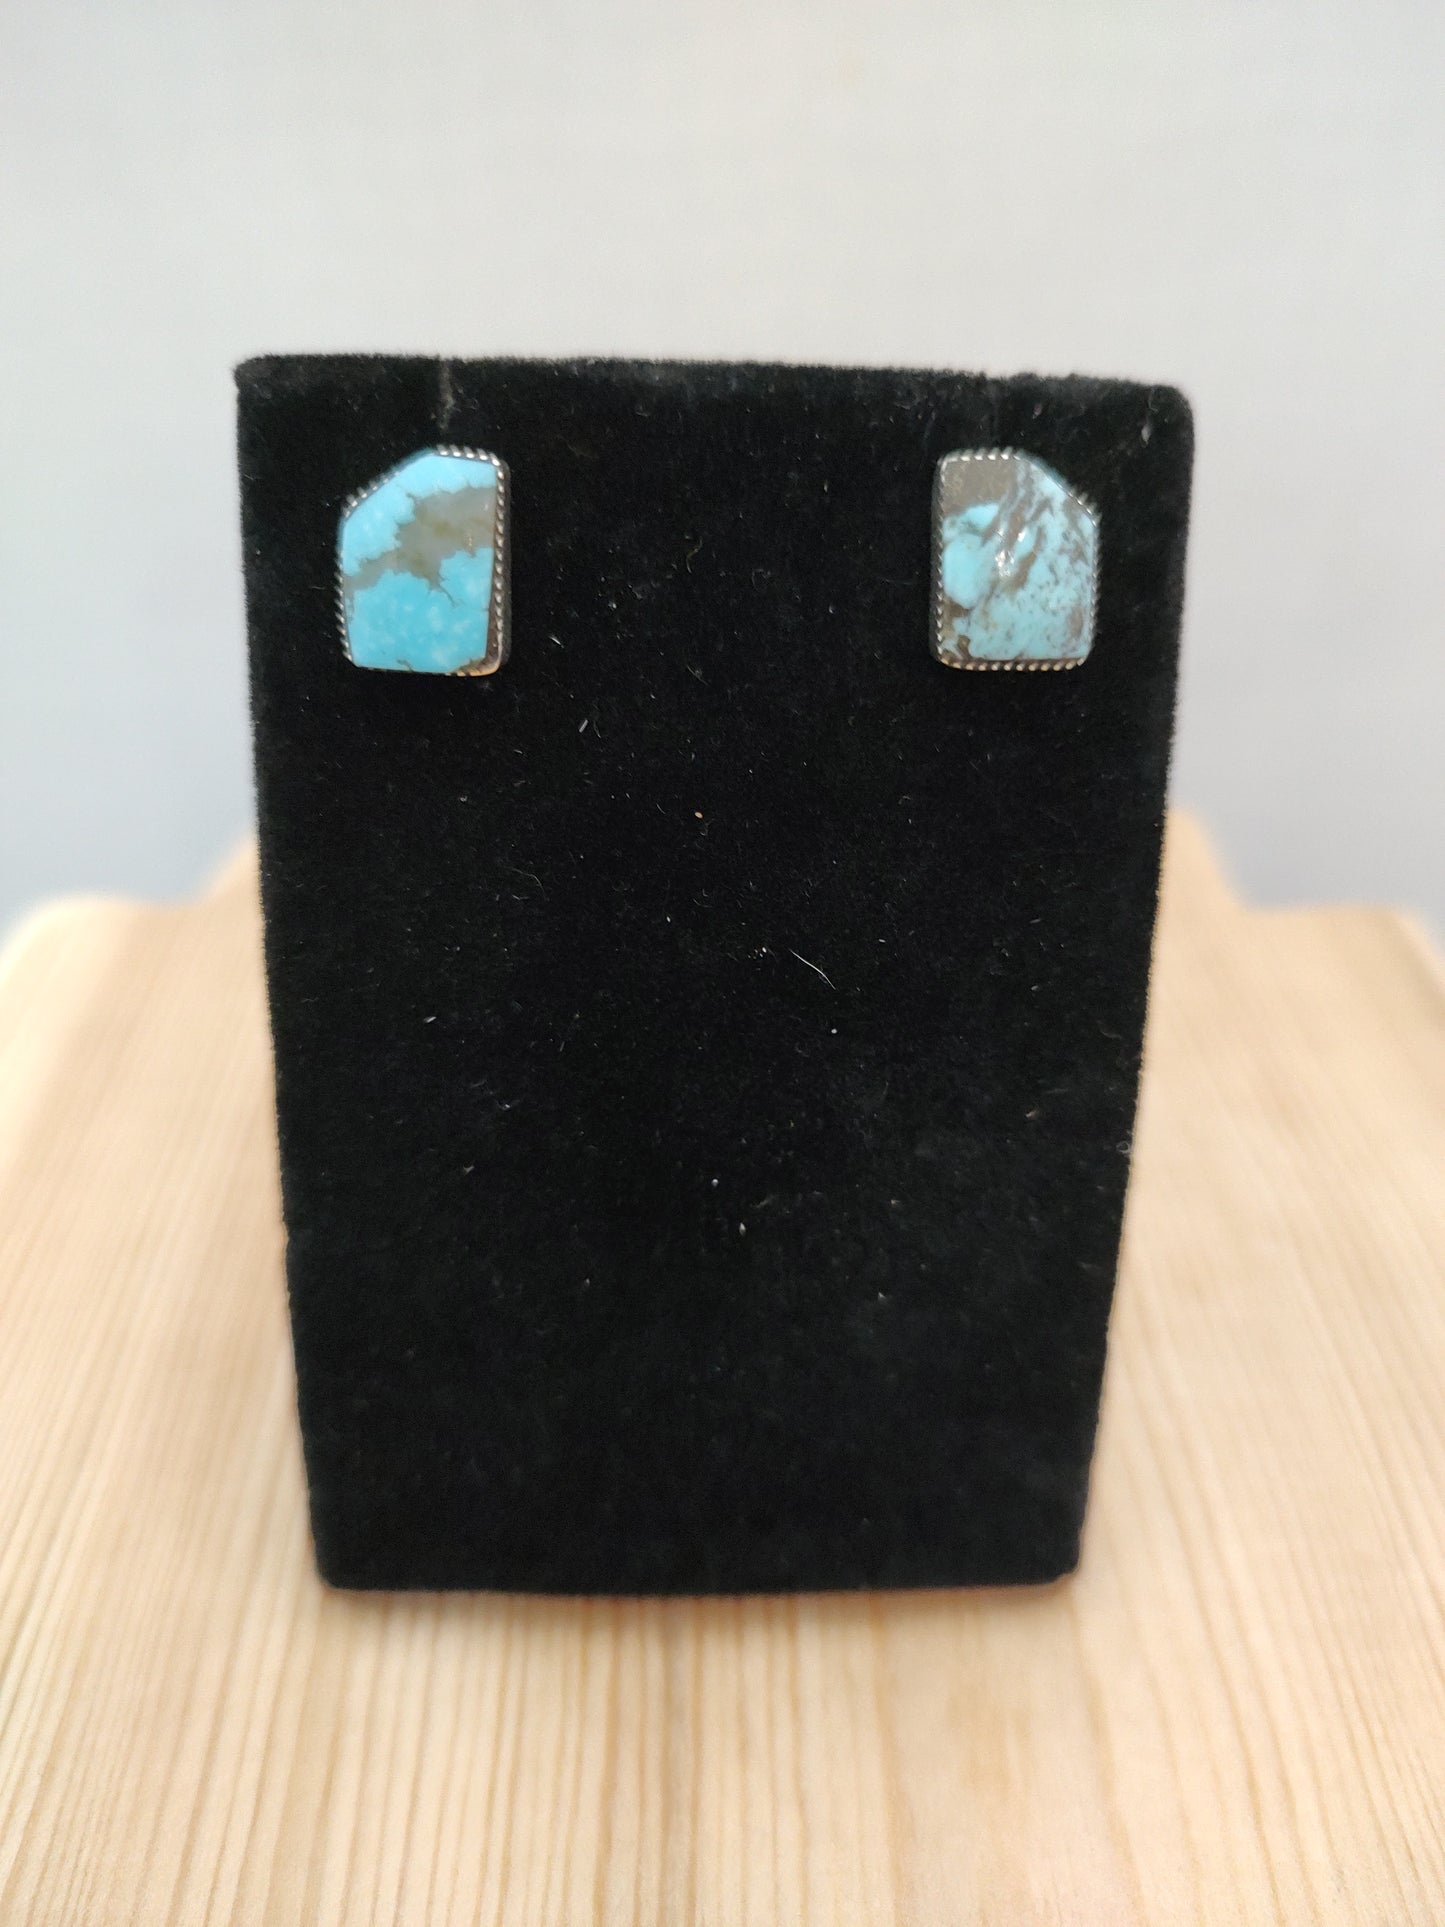 Bisbee Turquoise in Post Earrings